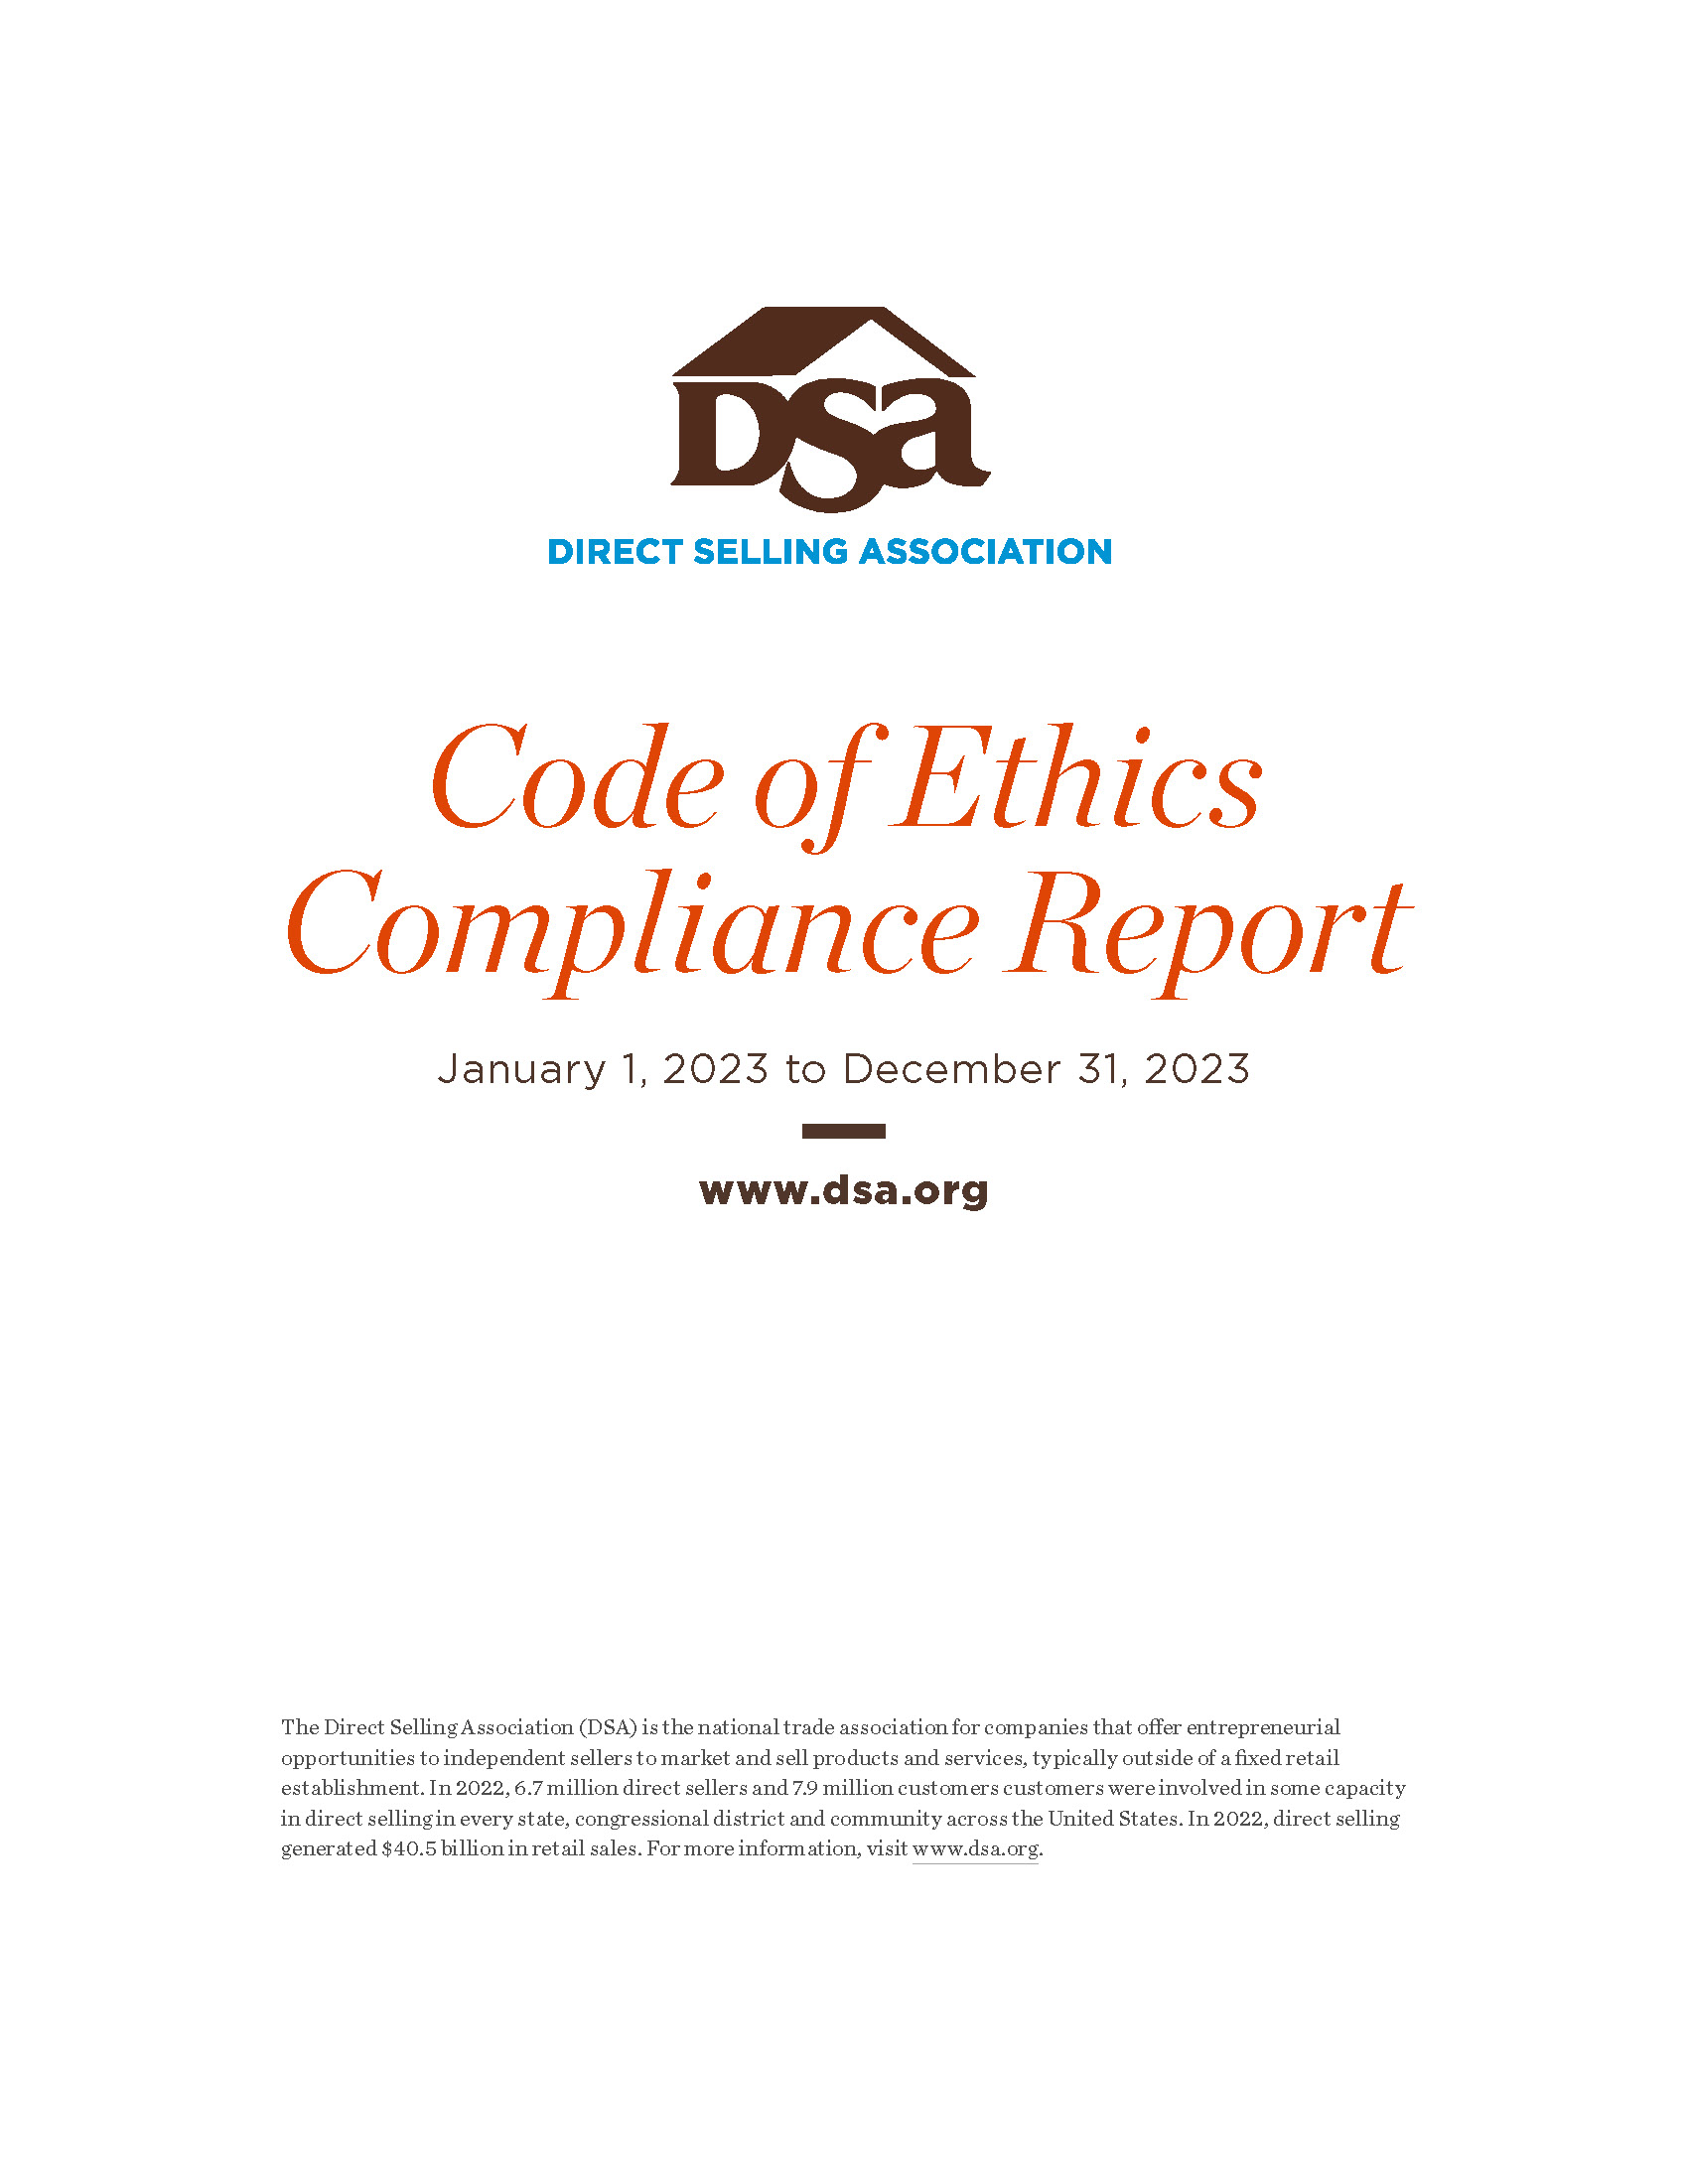 dsa_CoE Compliance2023_Generic (002)_Page_1